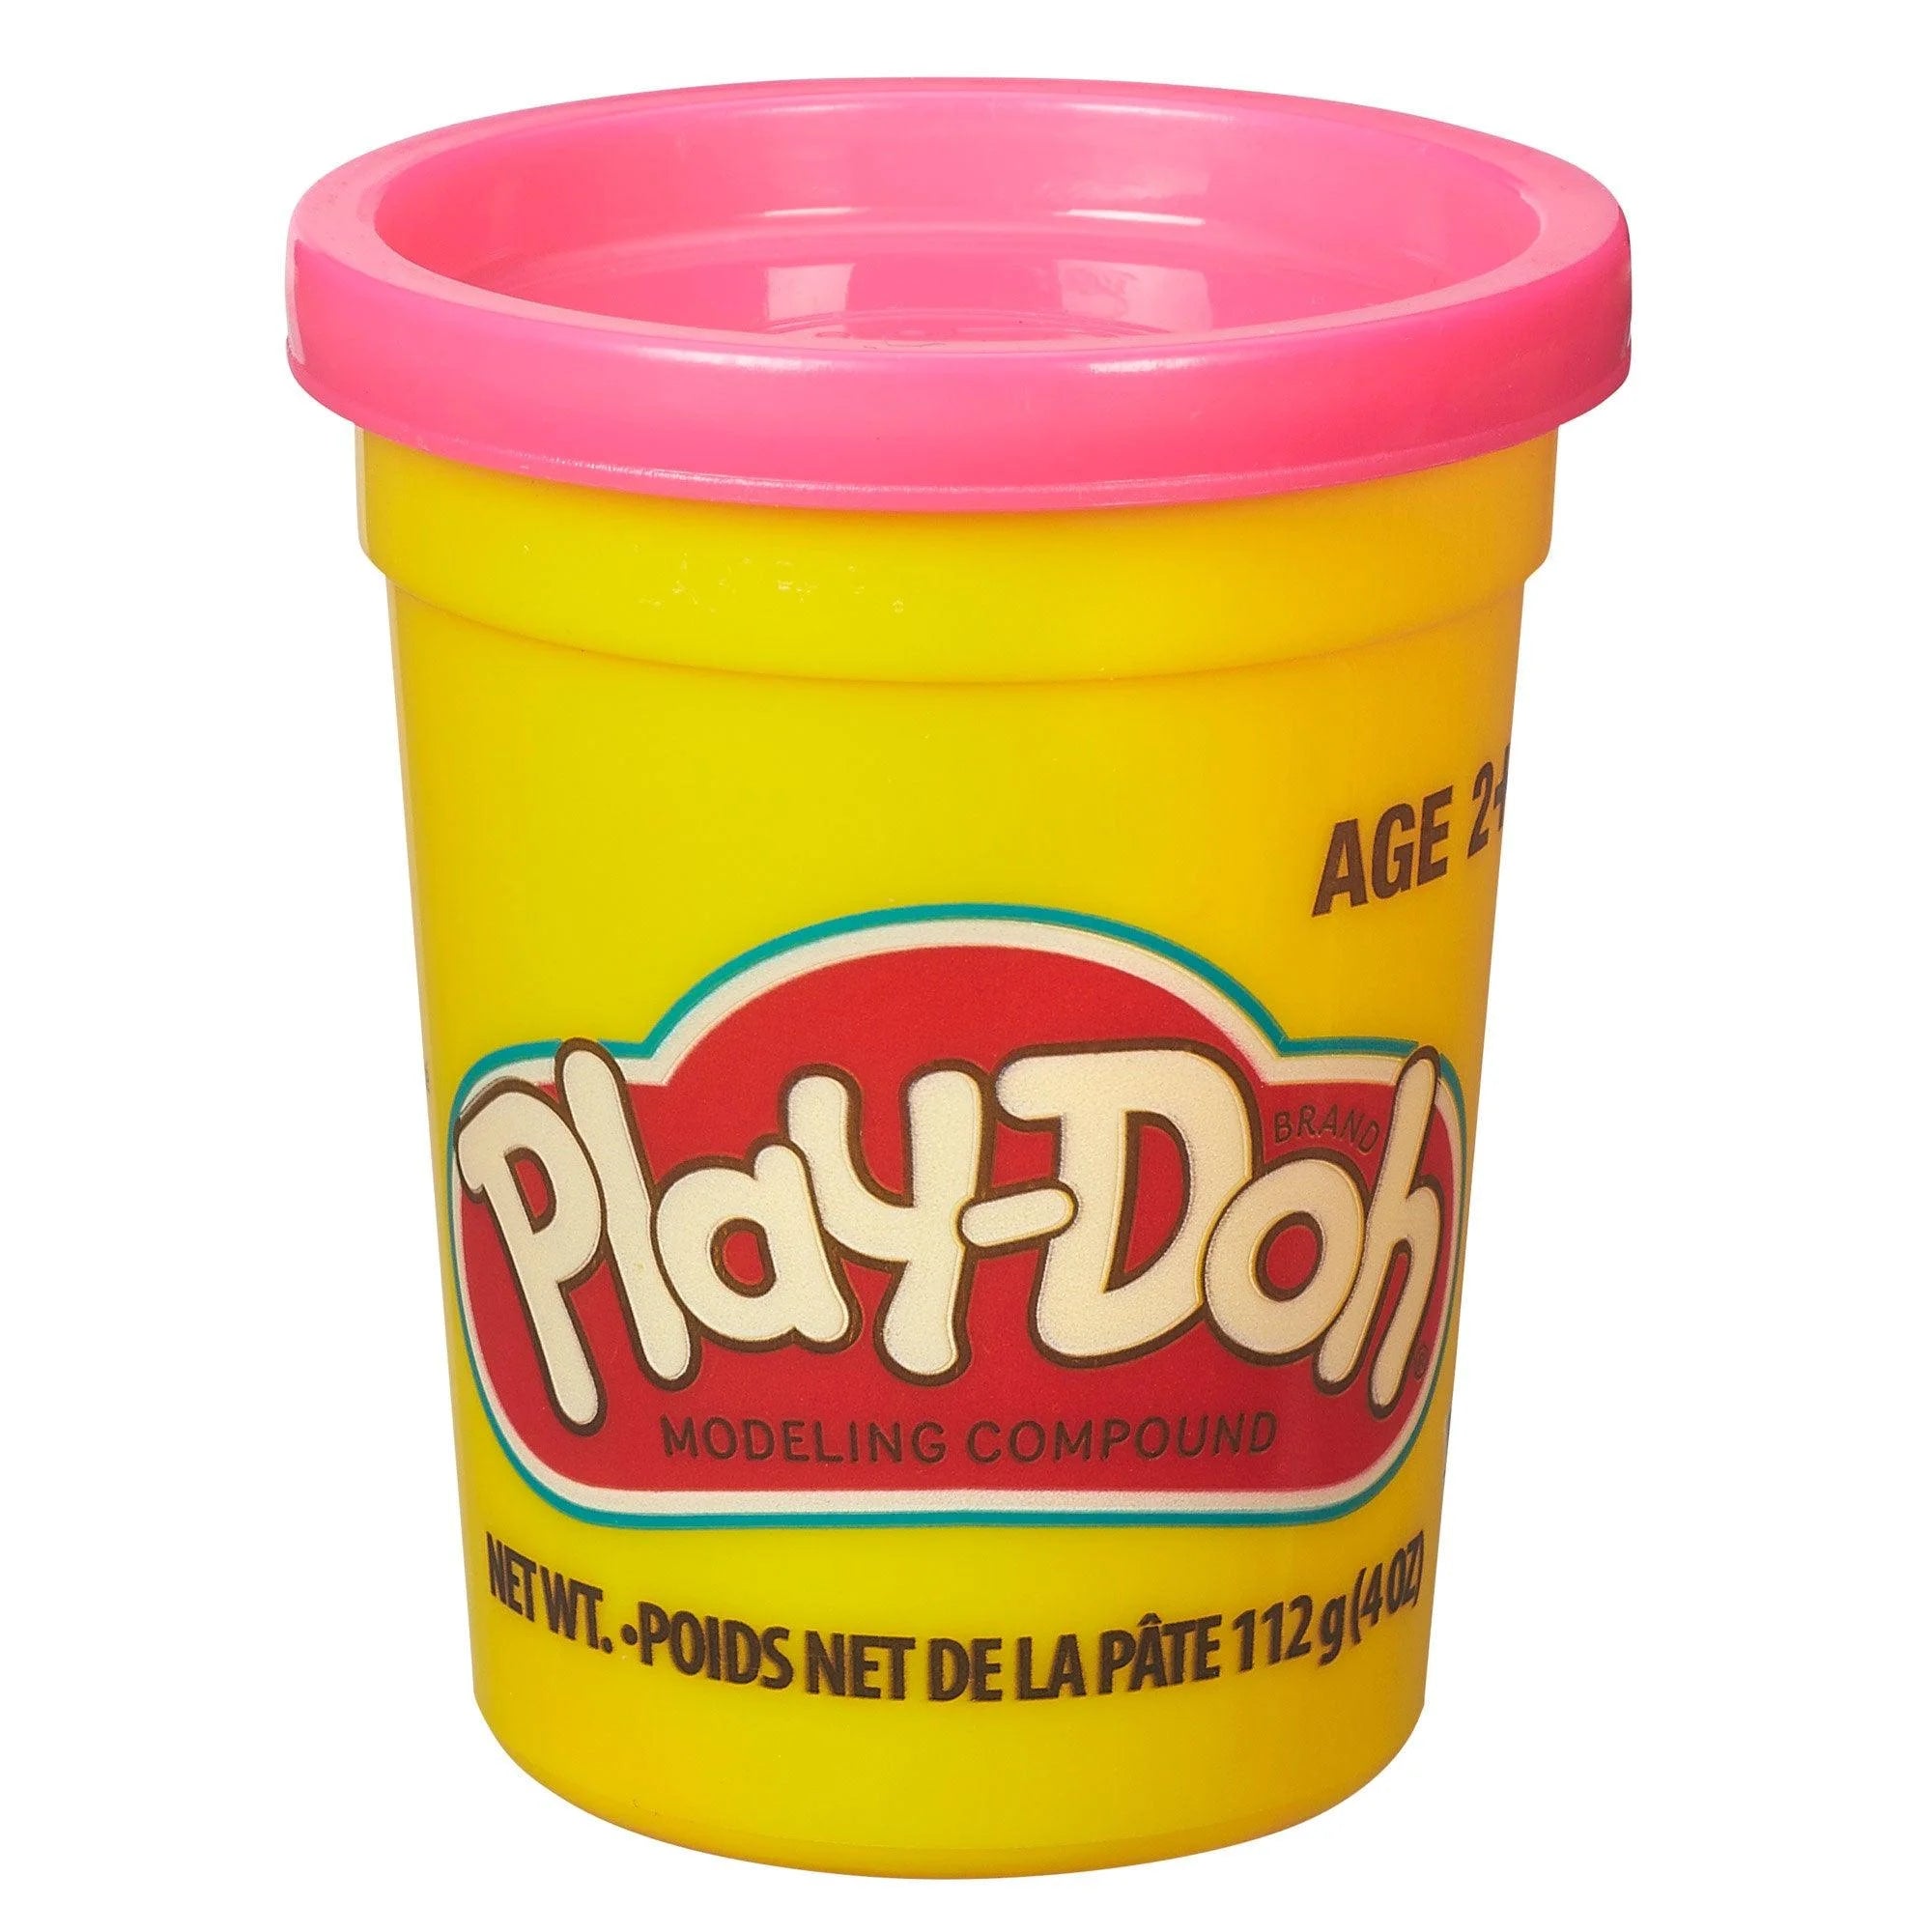 Play-Doh 4oz Single Can Assortment - PDQ